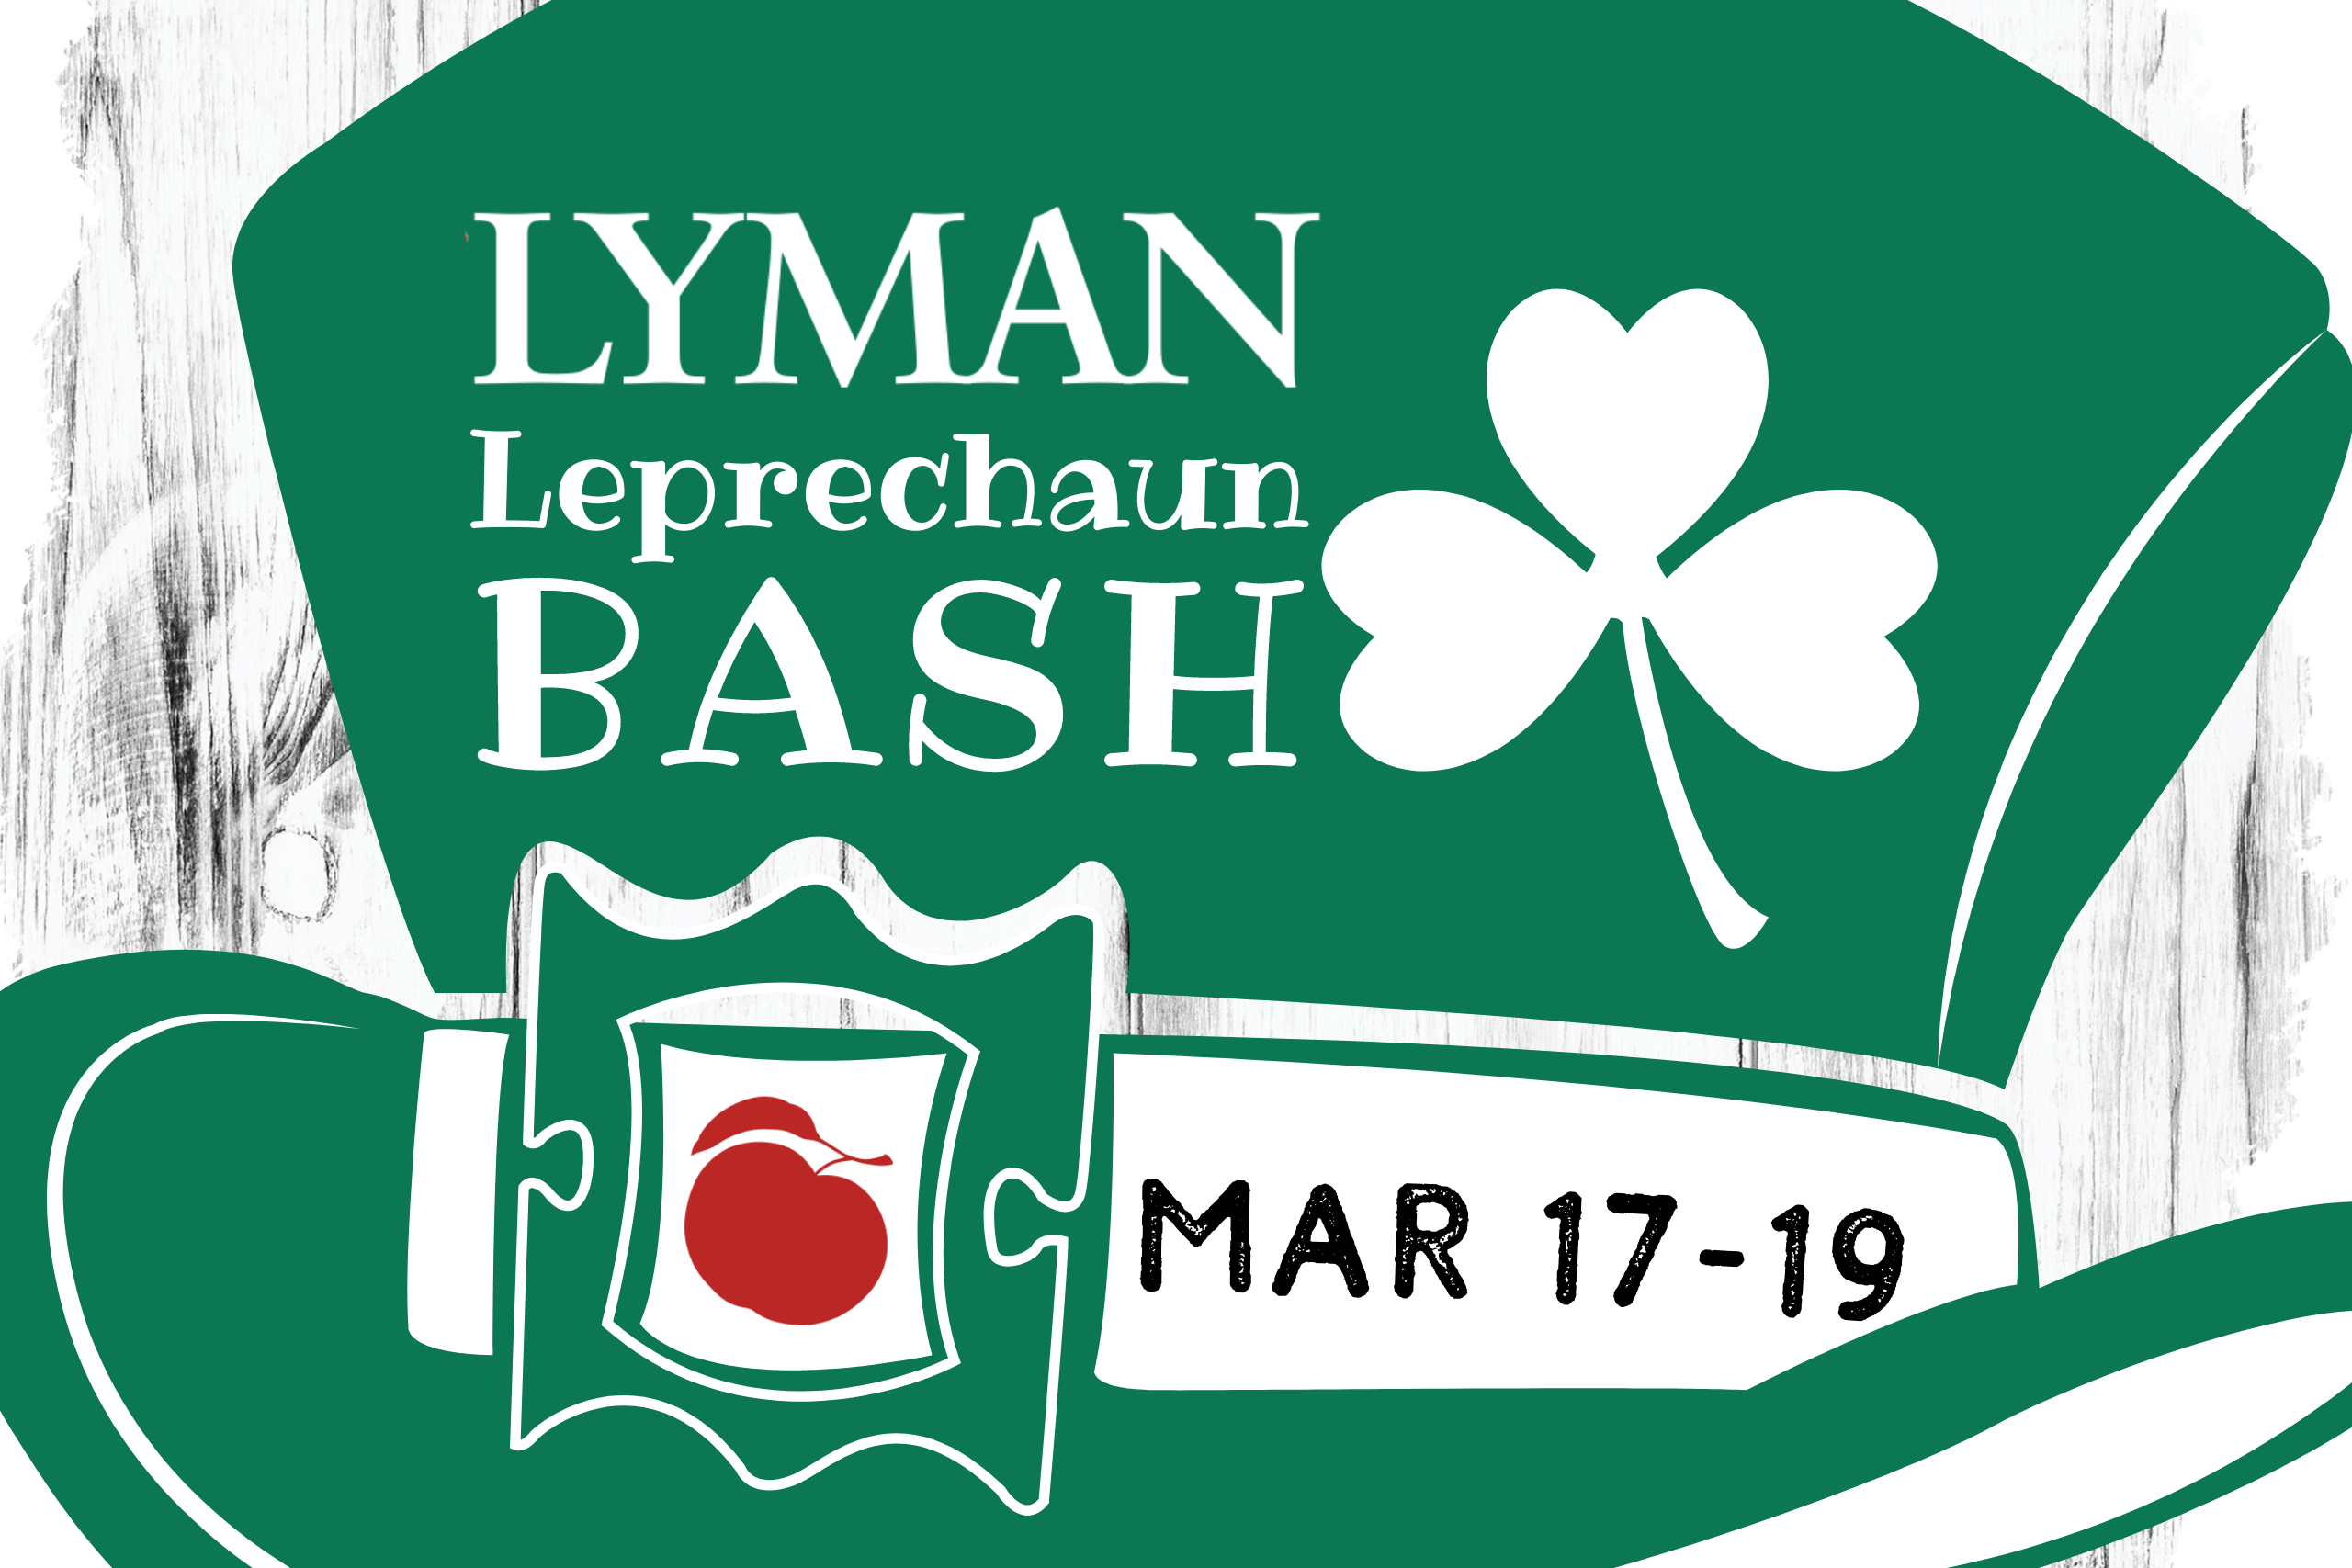 Lyman Leprechaun Bash at Lyman Orchards in Middlefield